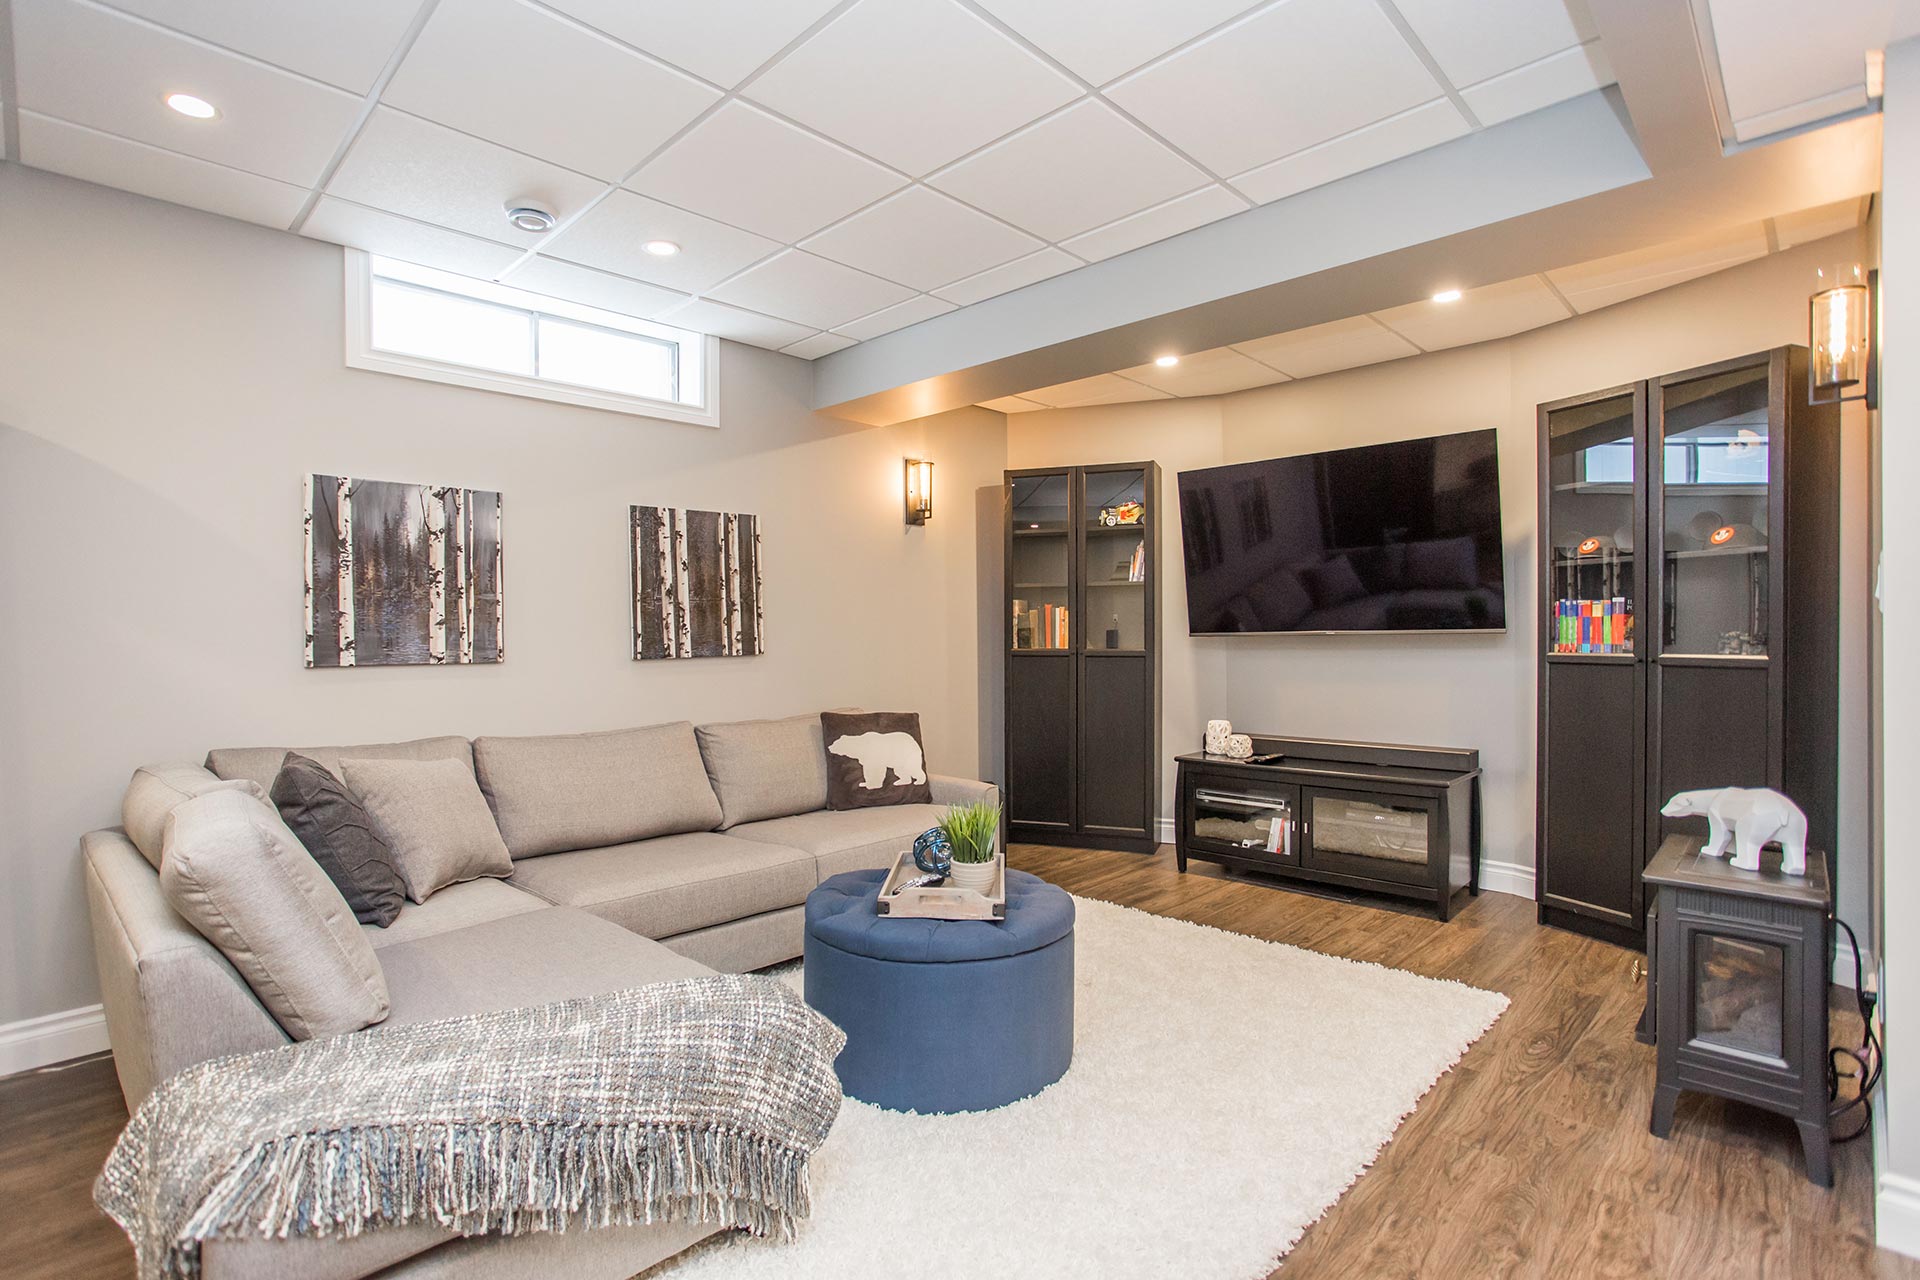 Belamour Homes - Essex Crescent Basement Renovation - Living Room